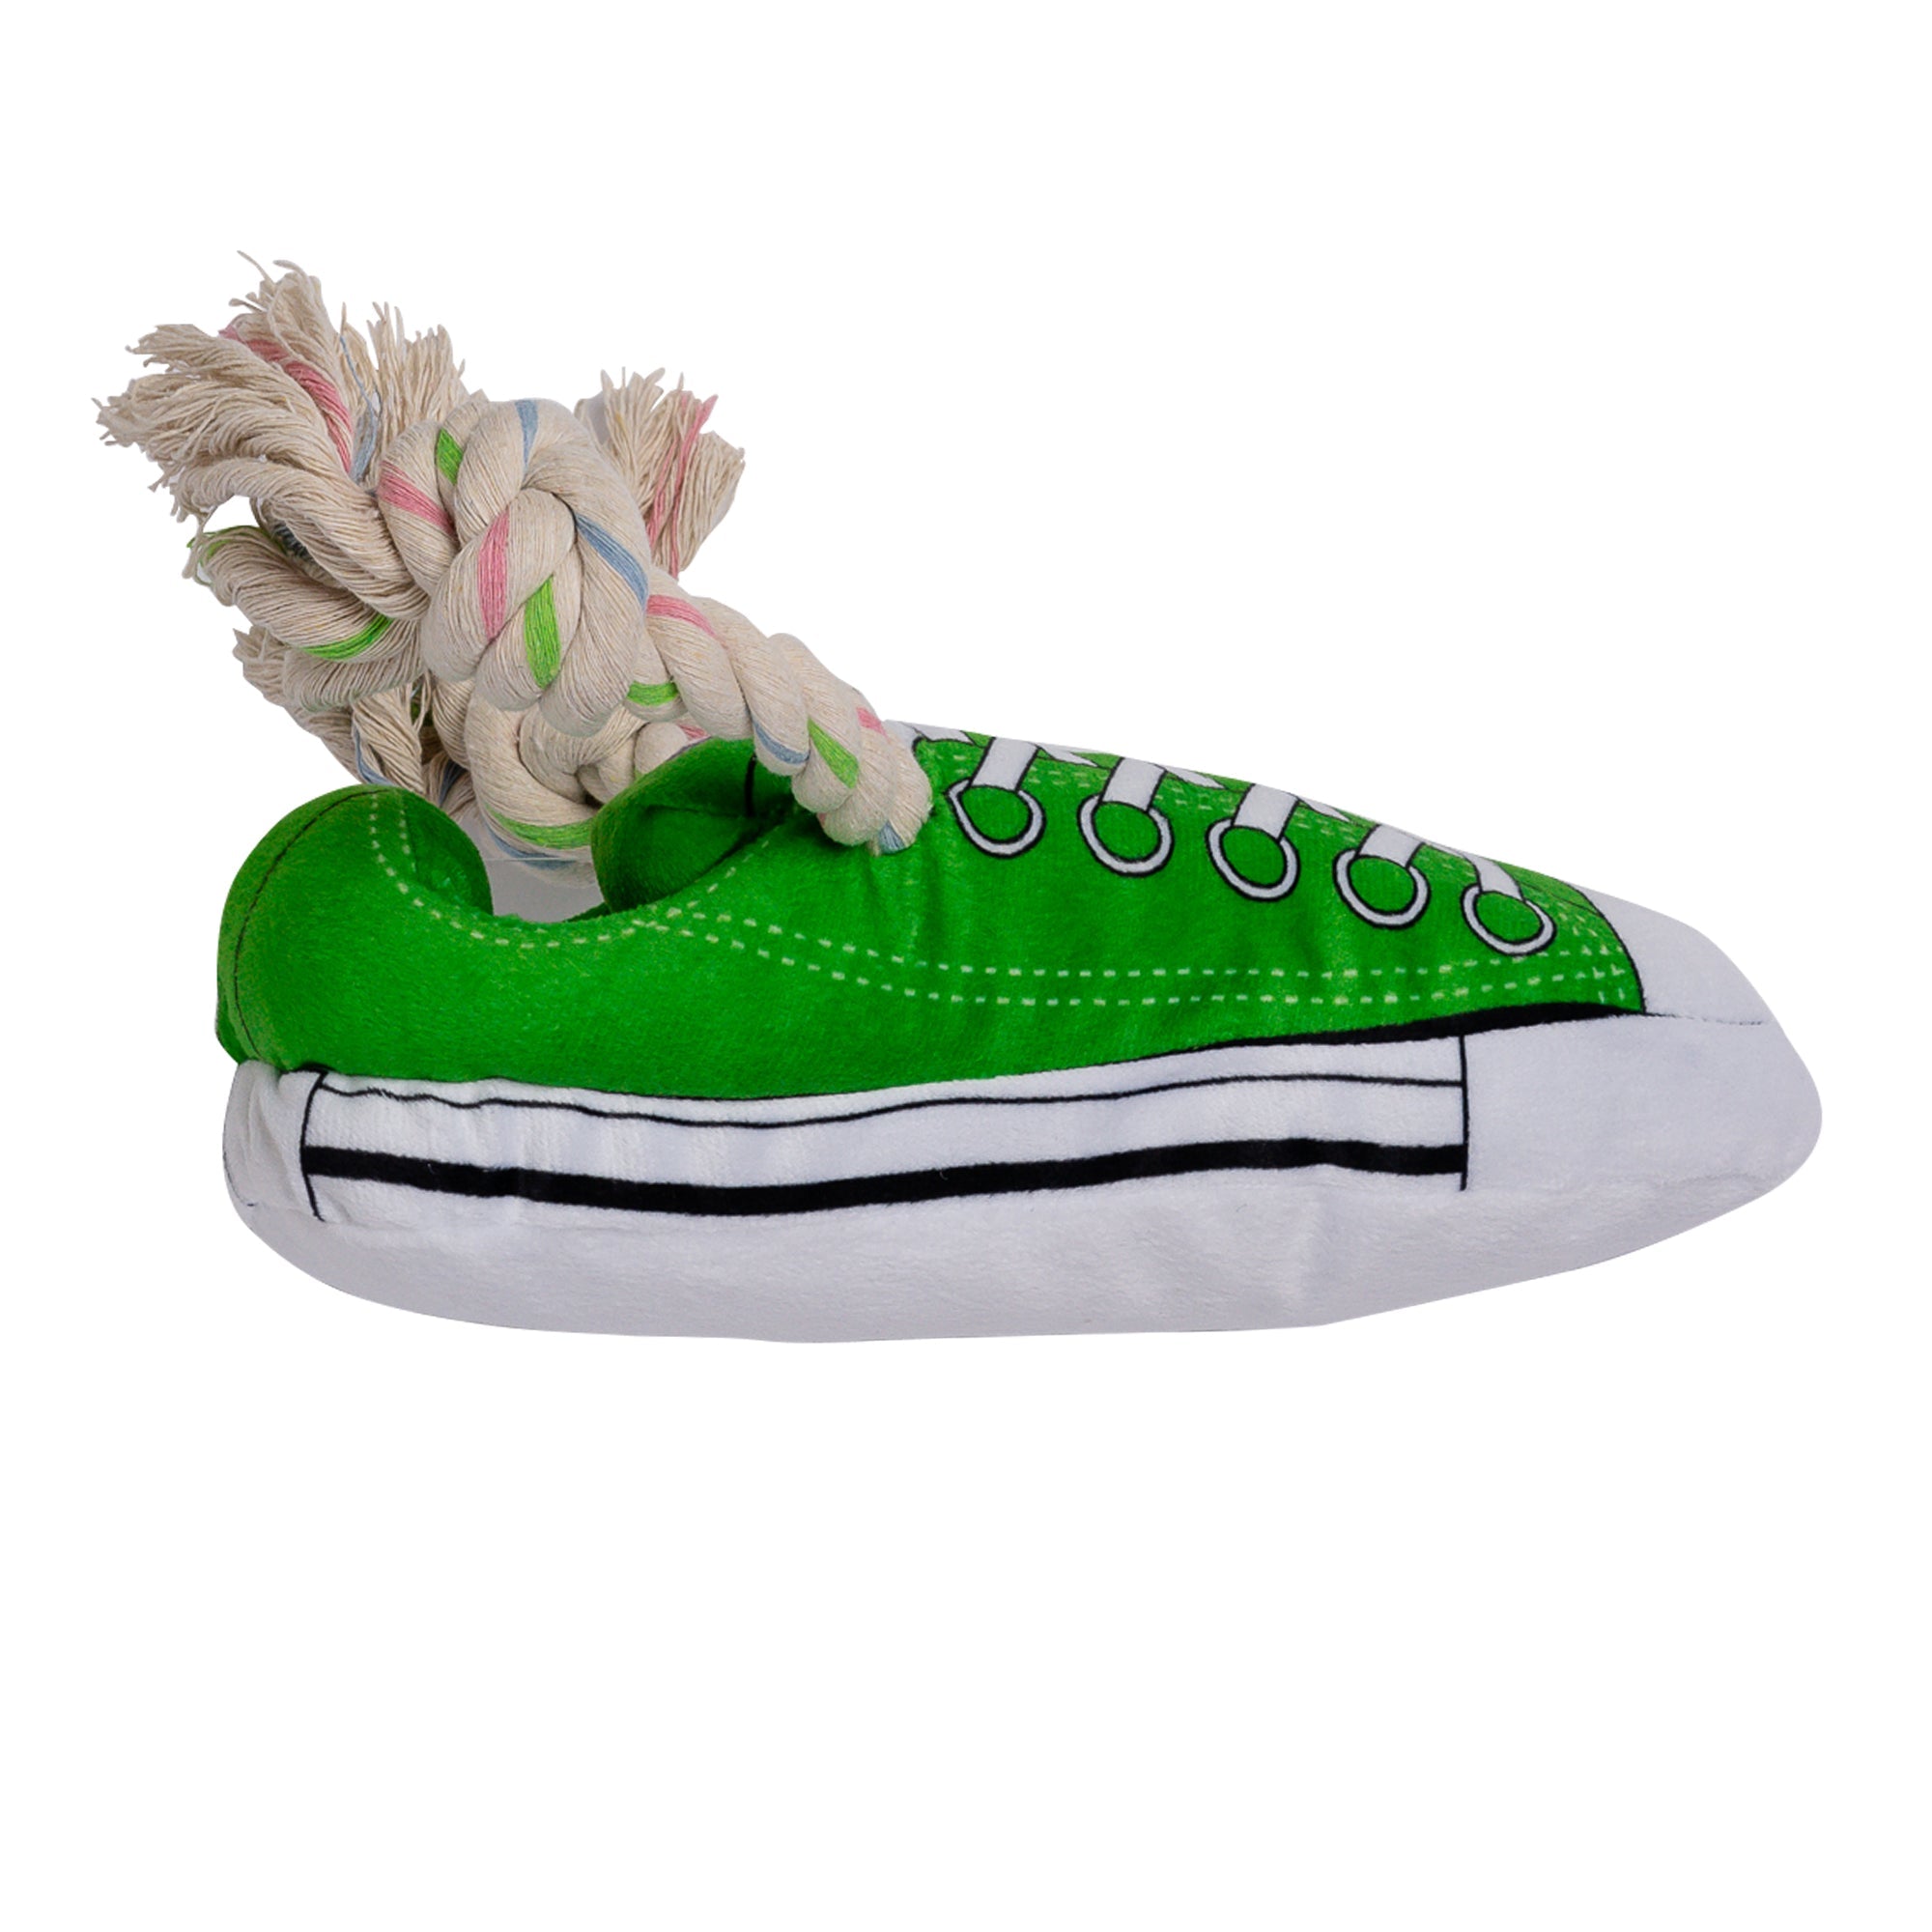 Squeaking Comfort Plush Sneaker Dog Toy - Green-3